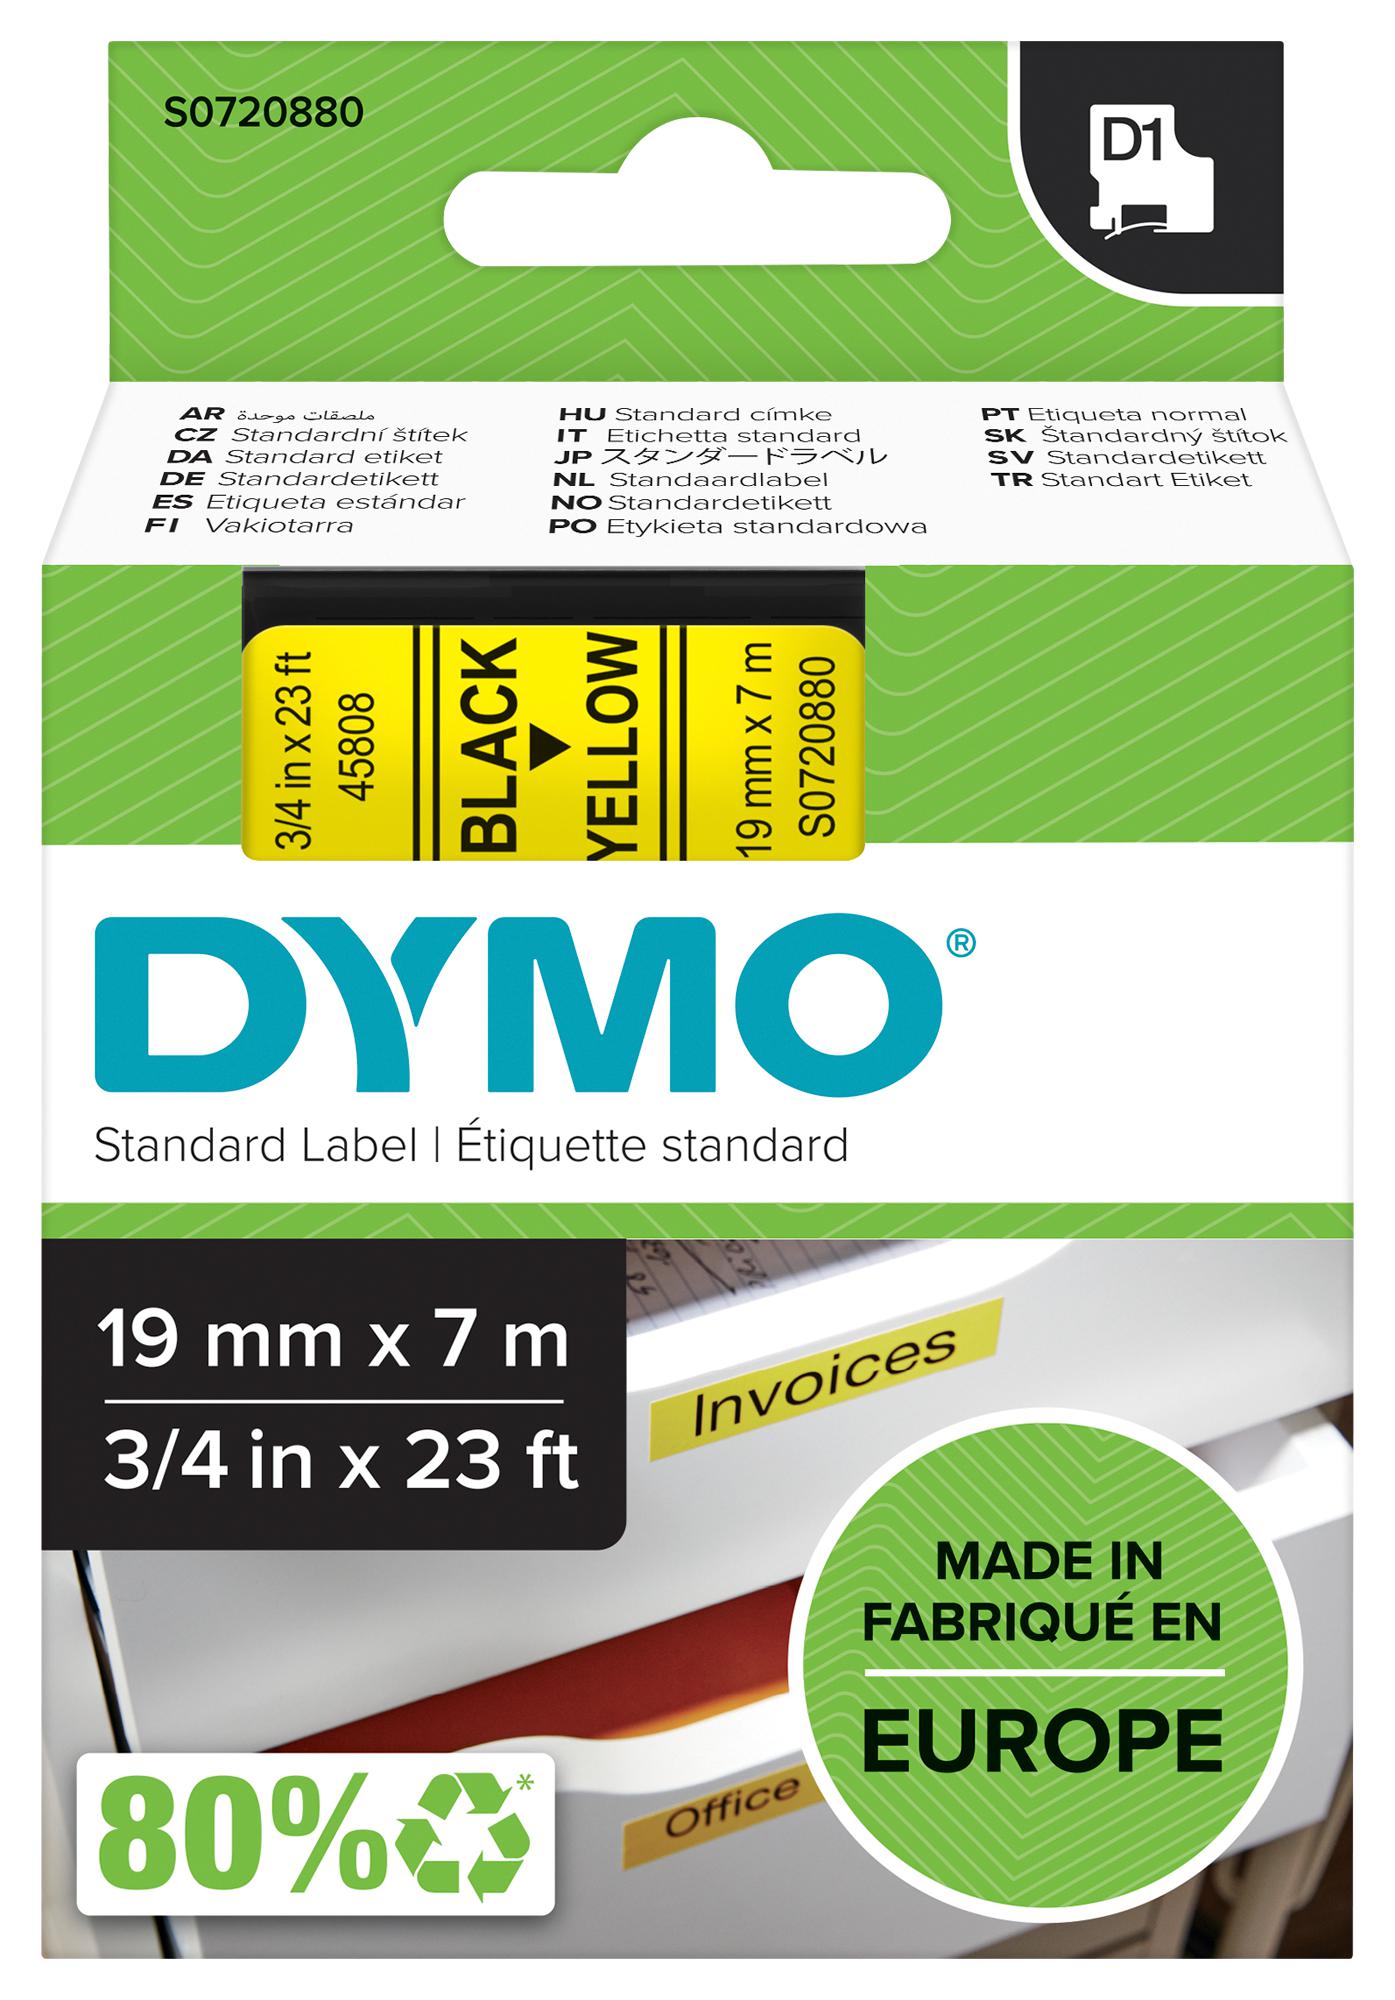 Dymo 45808 Tape, Black/yellow, 19mm